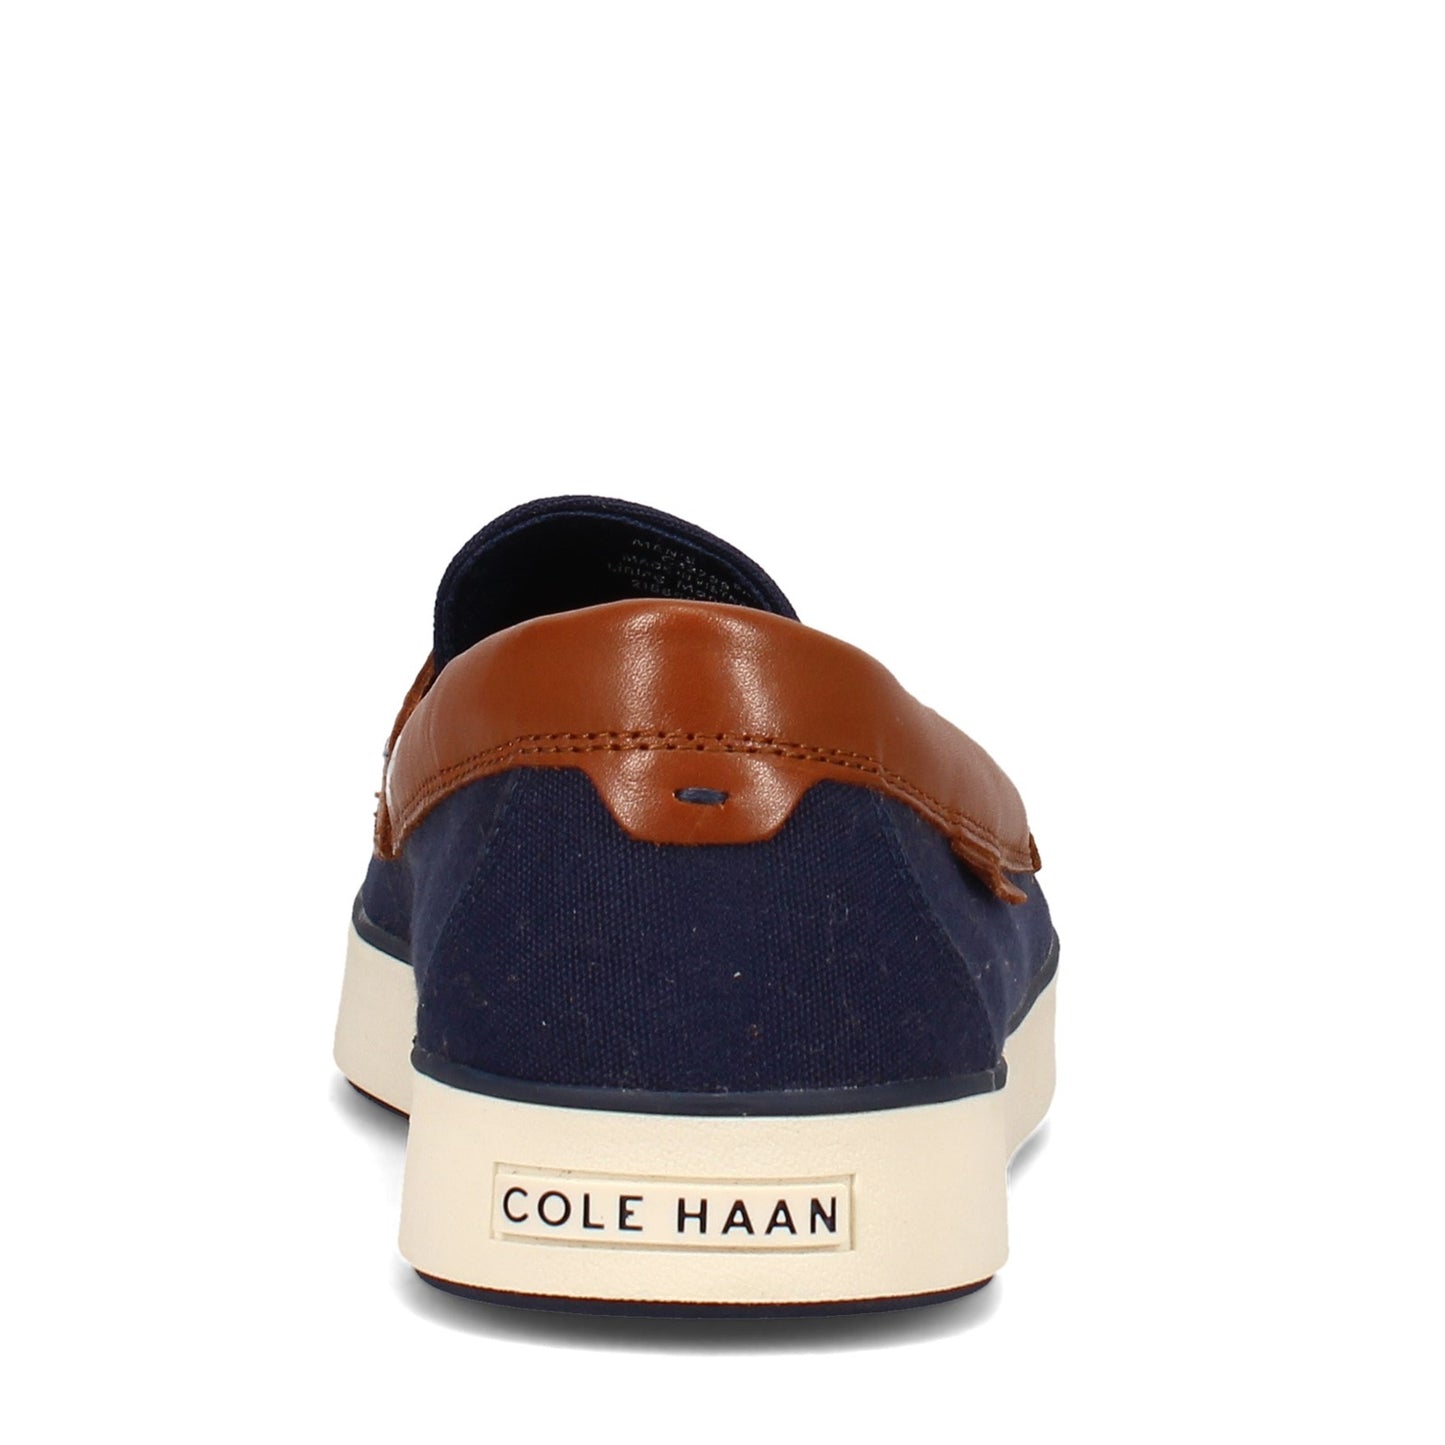 Peltz Shoes  Men's Cole Haan Nantucket Loafer II Penny Loafer NAVY TAN C33799